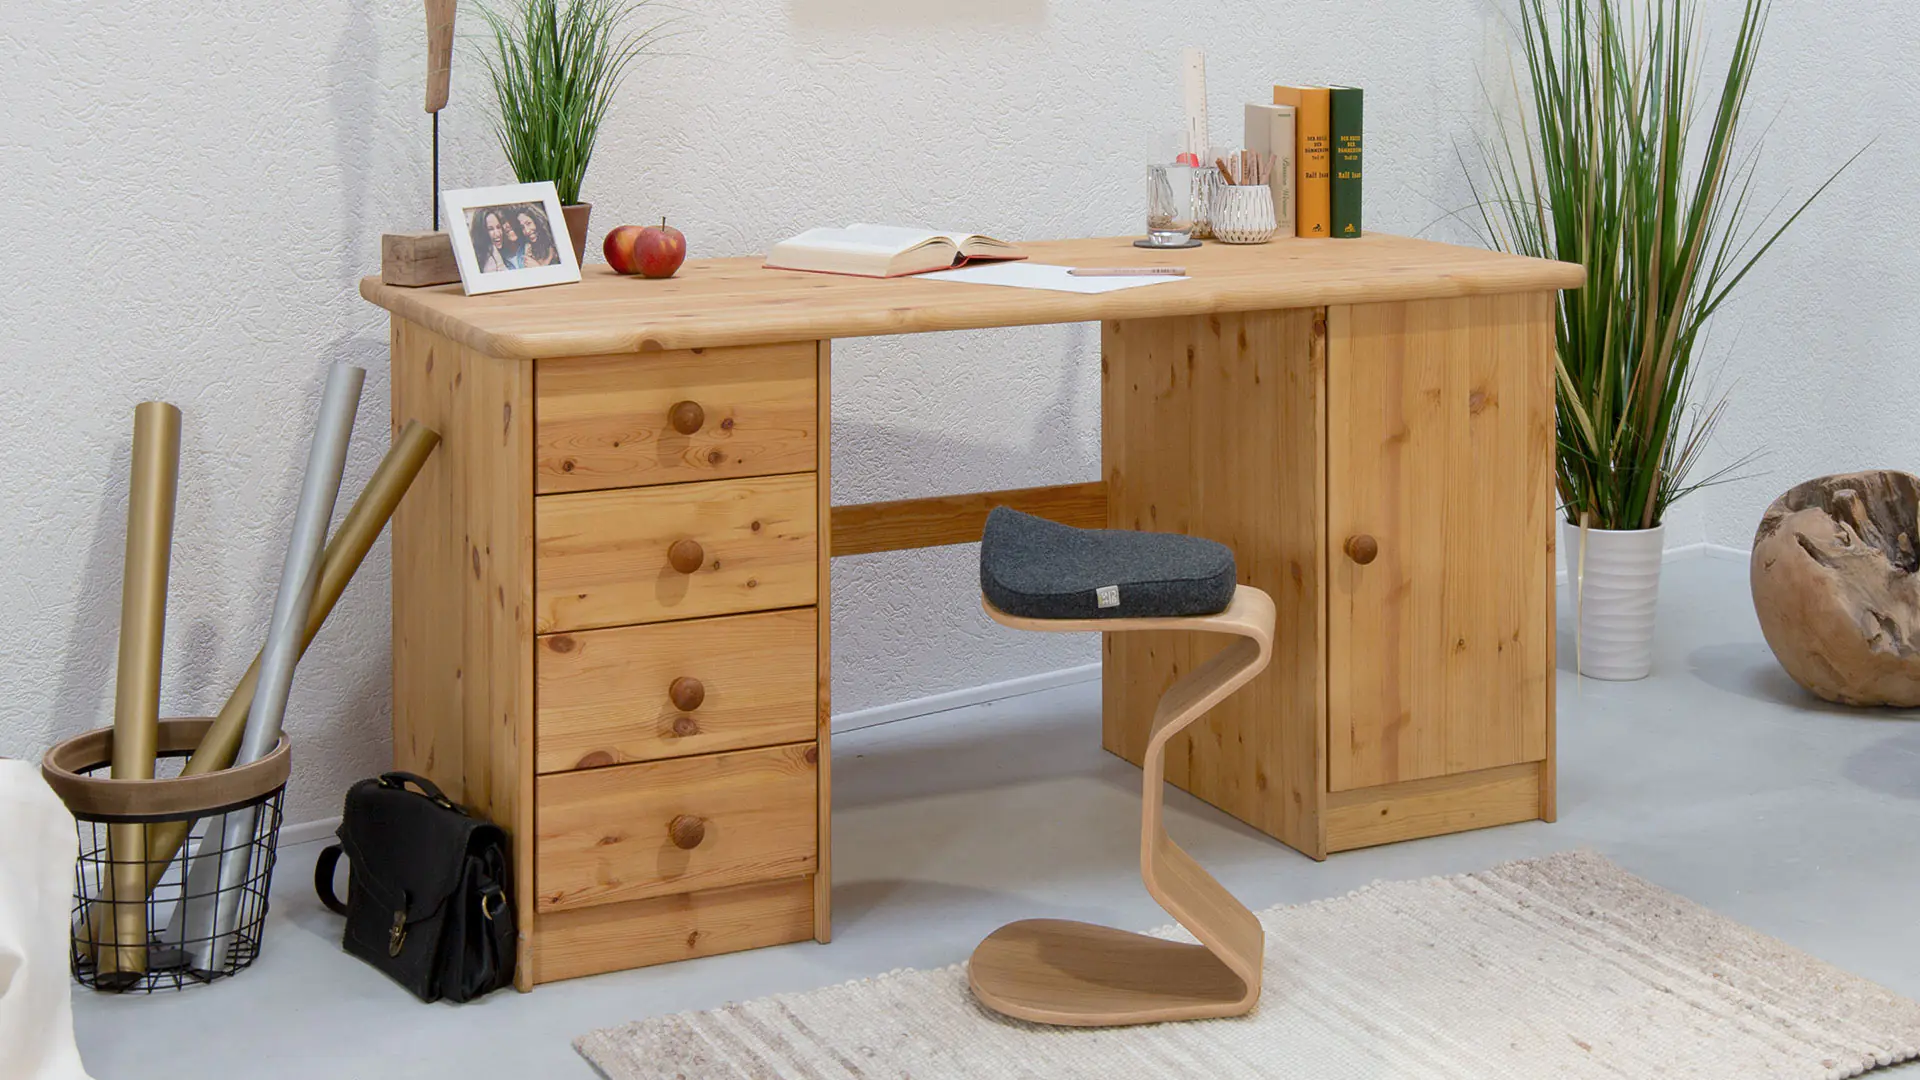 Desk Nino, versie 02 met geloogd/geolied oppervlak